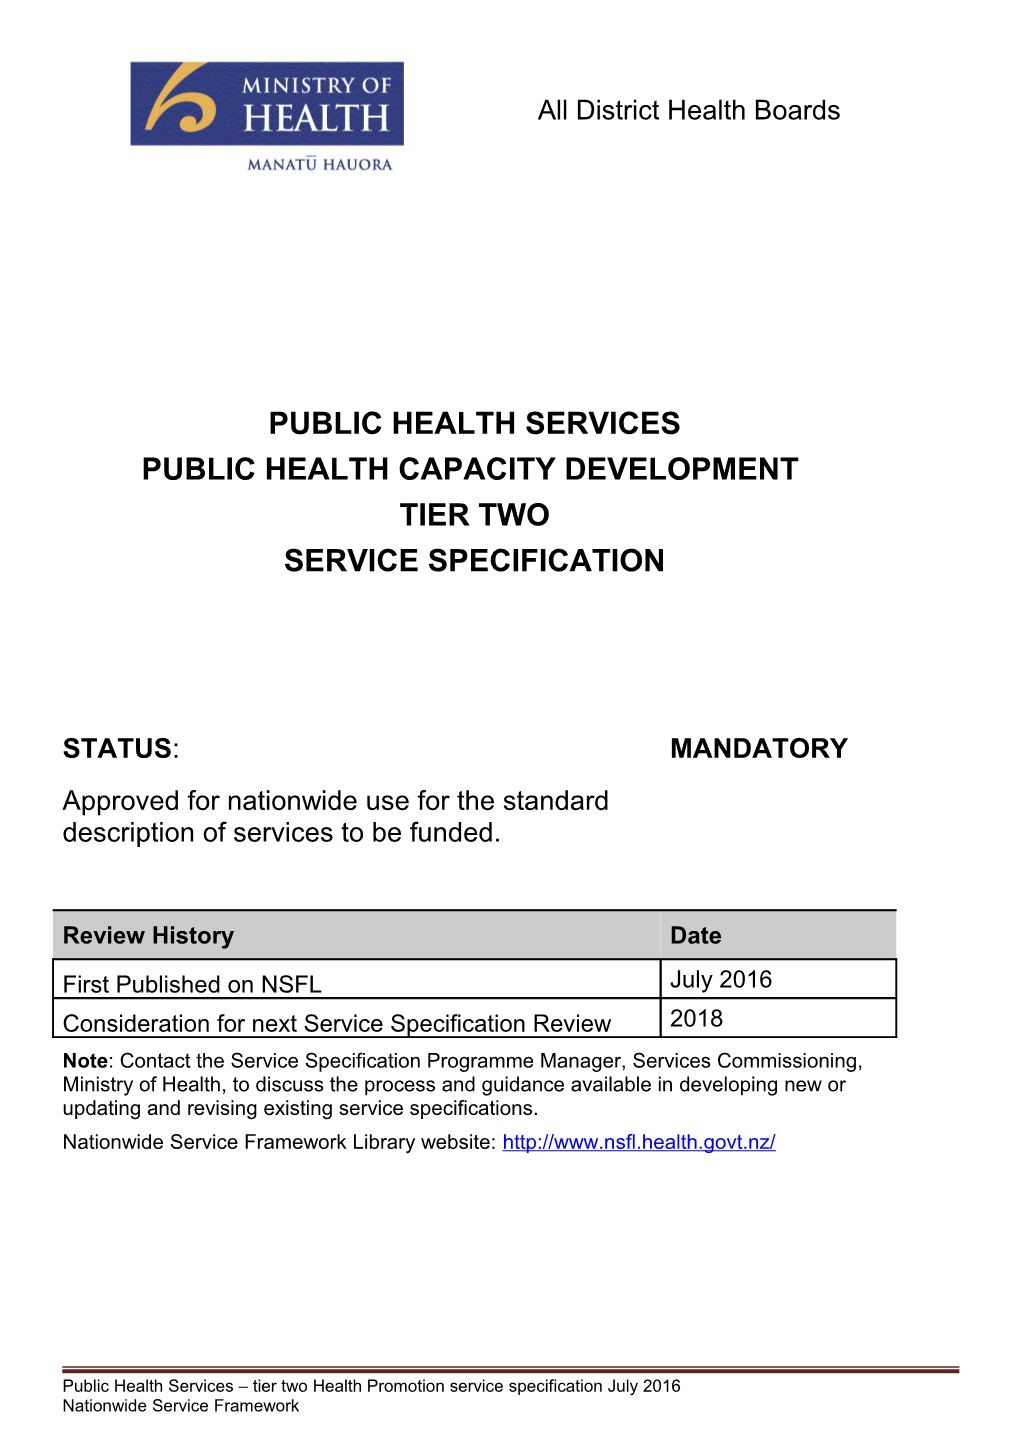 Public Health Capacity Development